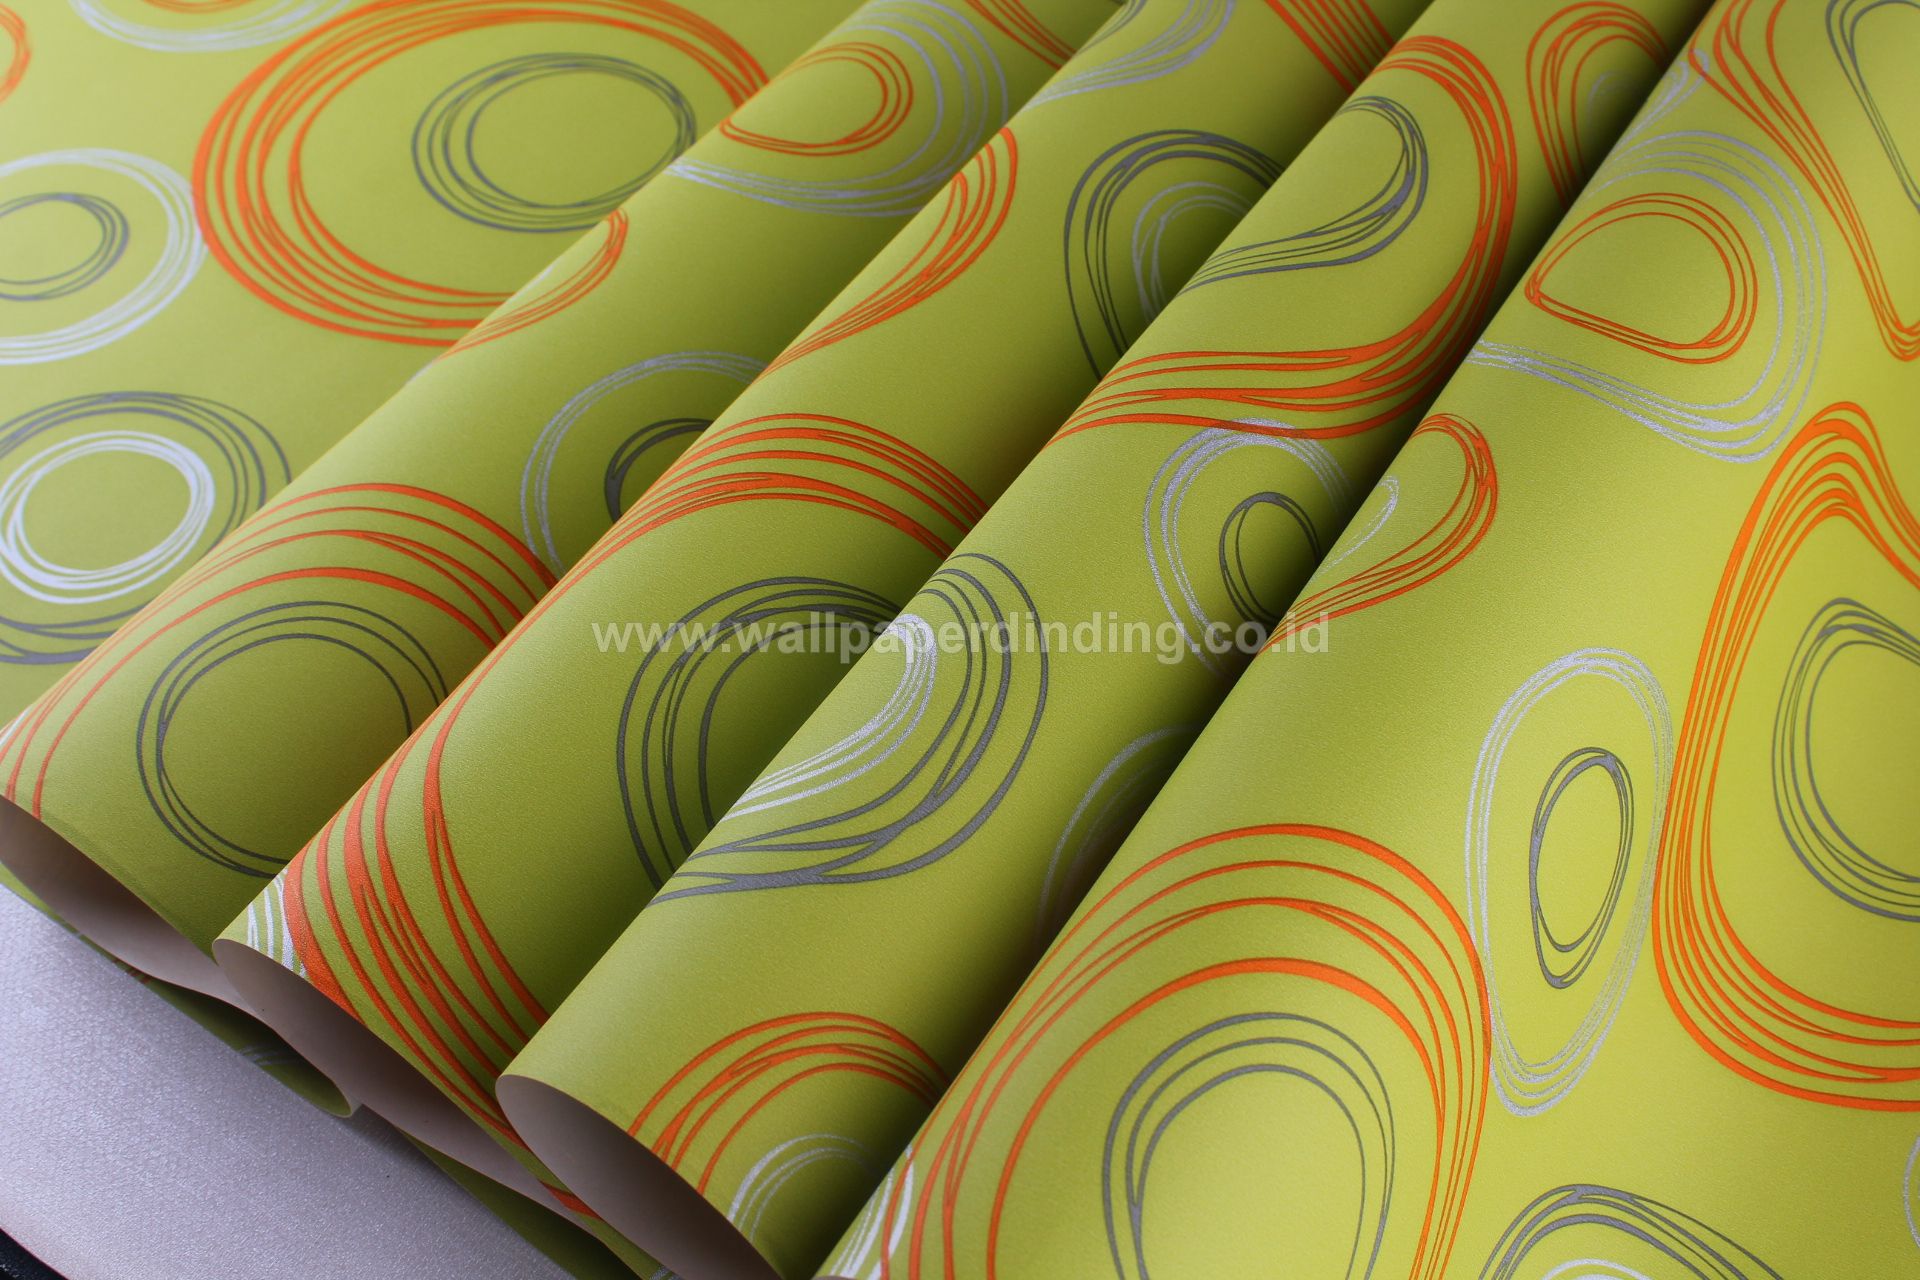 Wallpaper Dinding Bulat Minimalis Hijau Wow844 - Circle - HD Wallpaper 